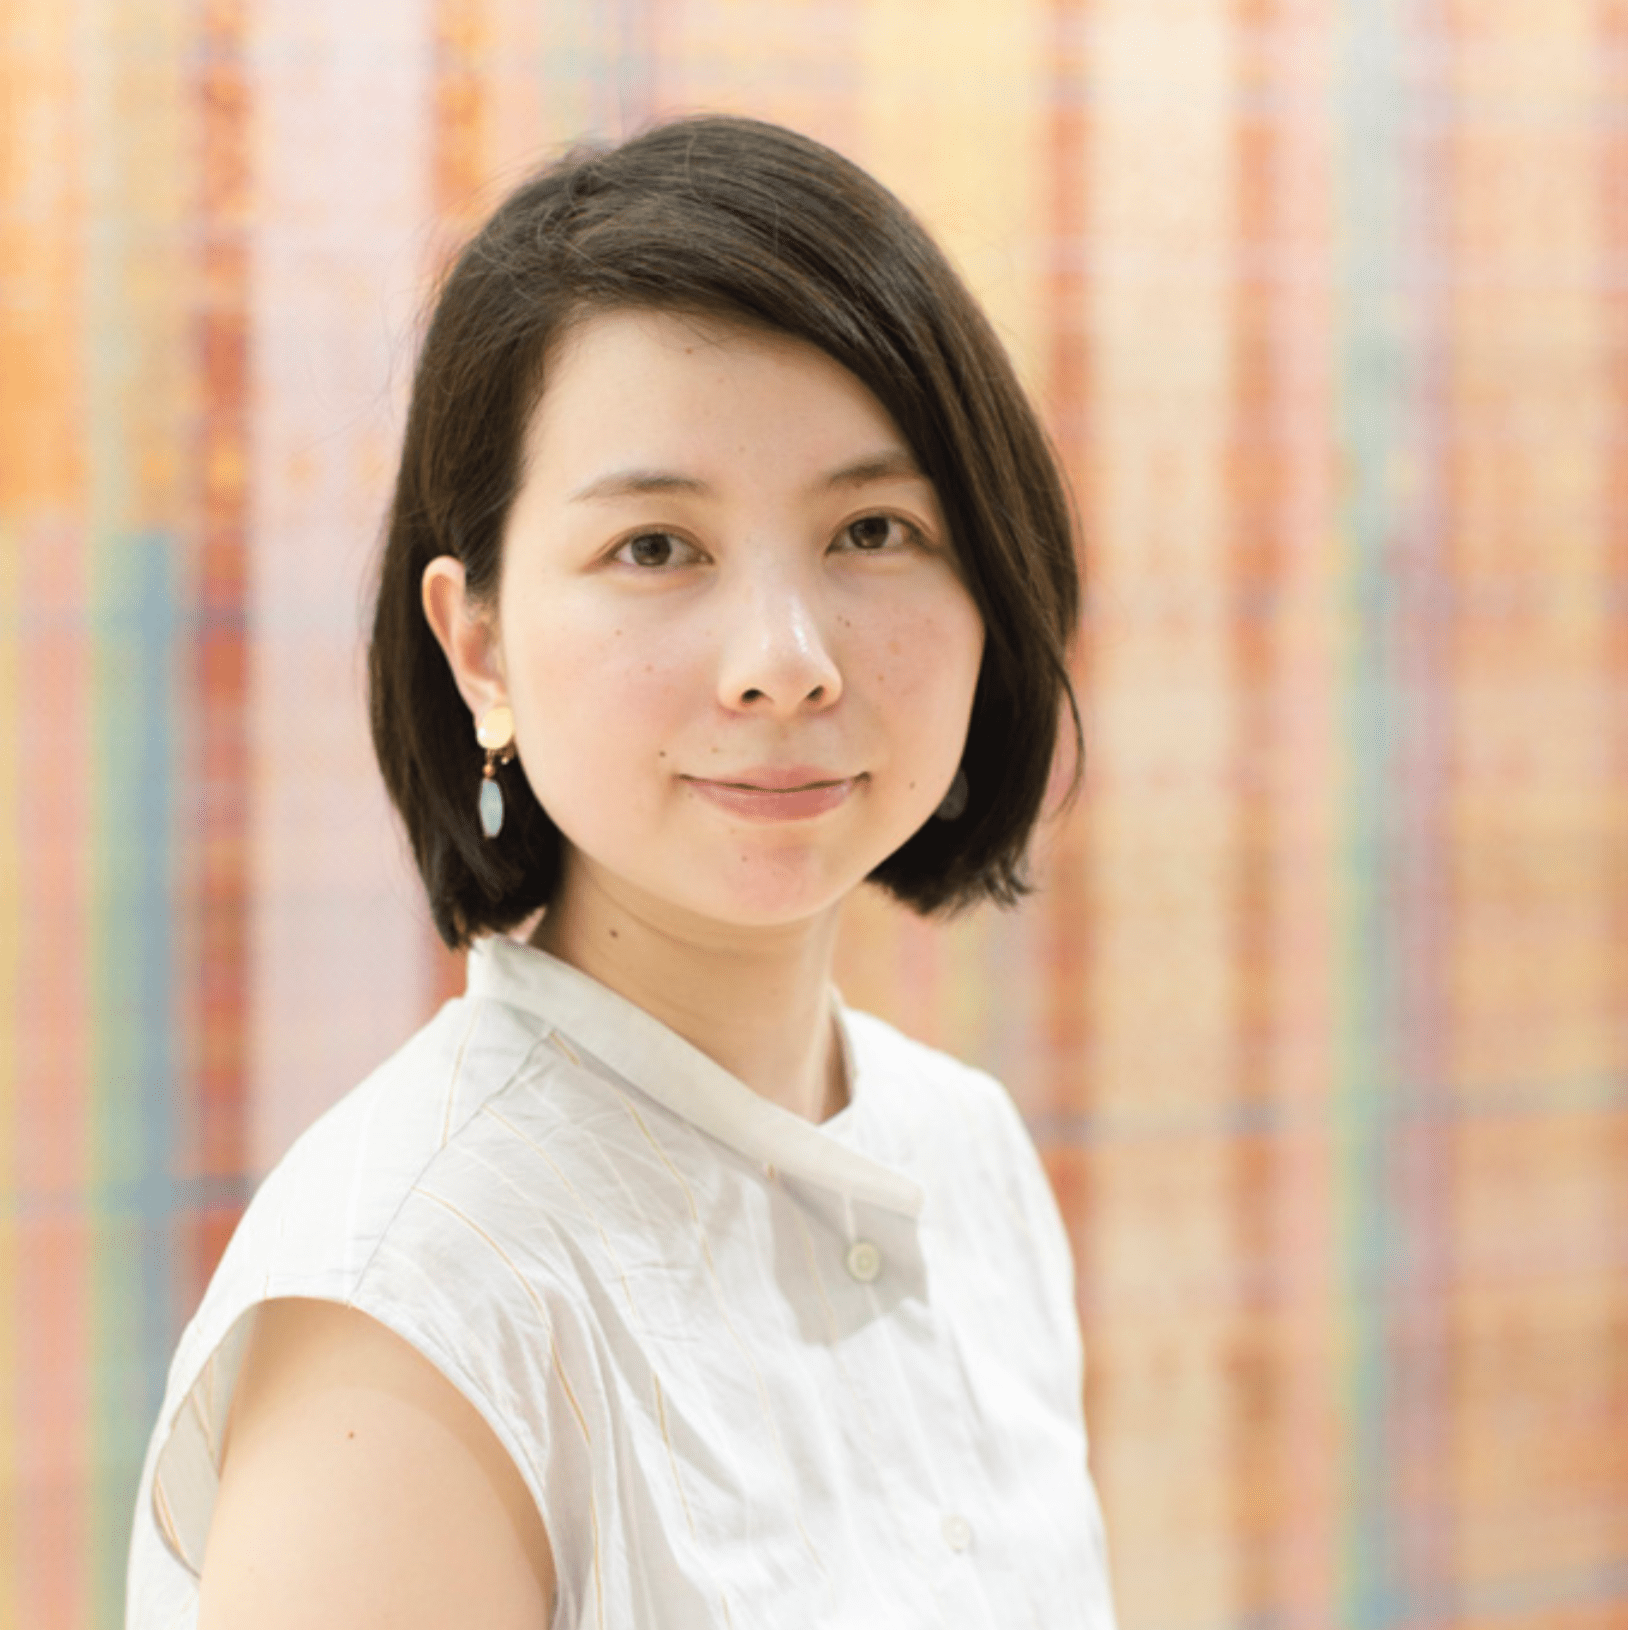 Portrait of the Japanese contemporary artist Aya Kawato